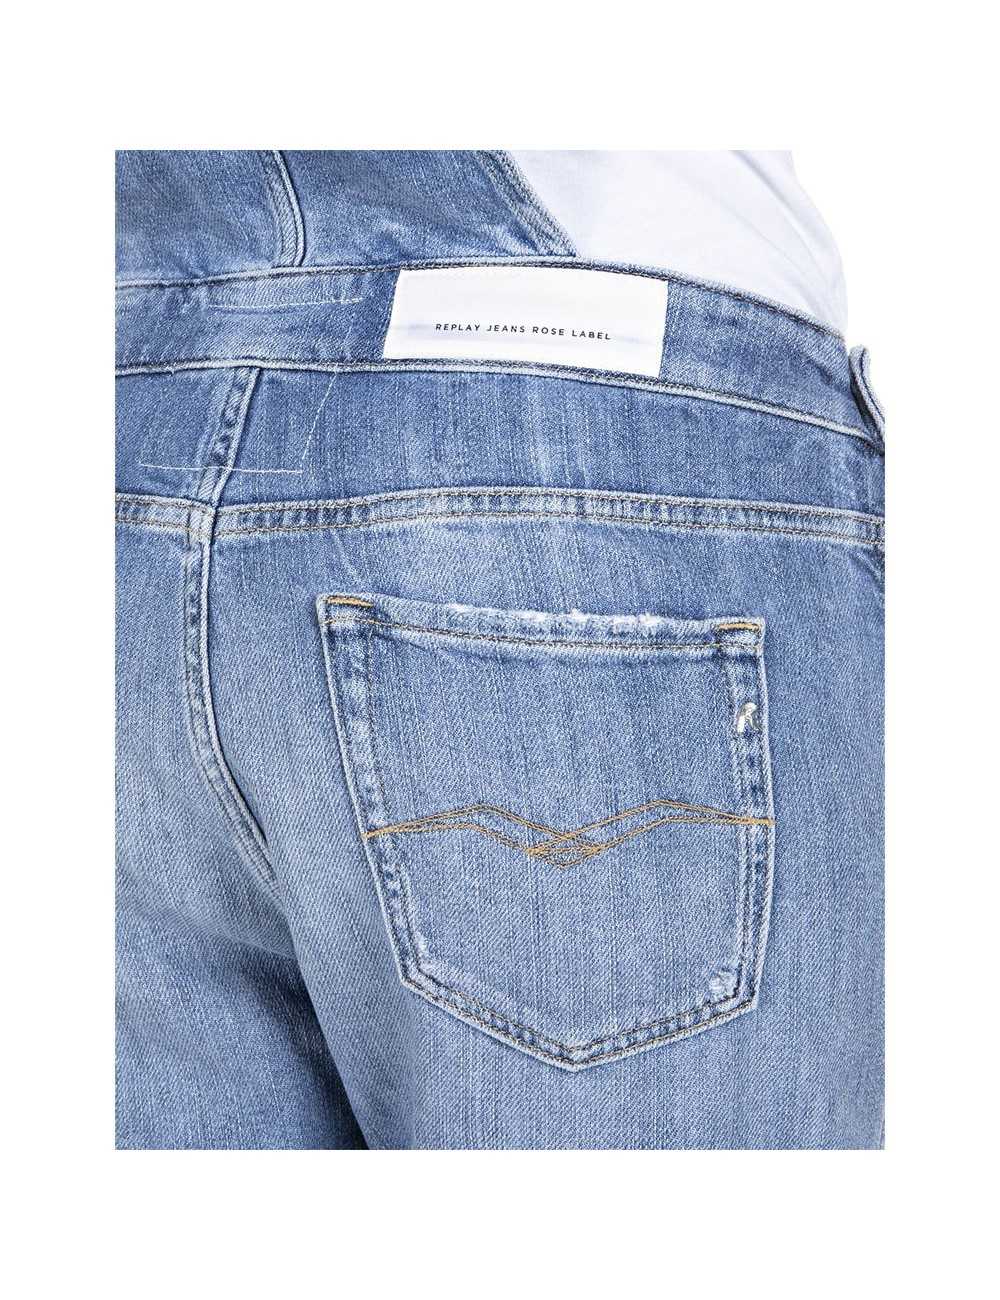 Salopette in Jeans denim - Jeans & Pantaloni Donna